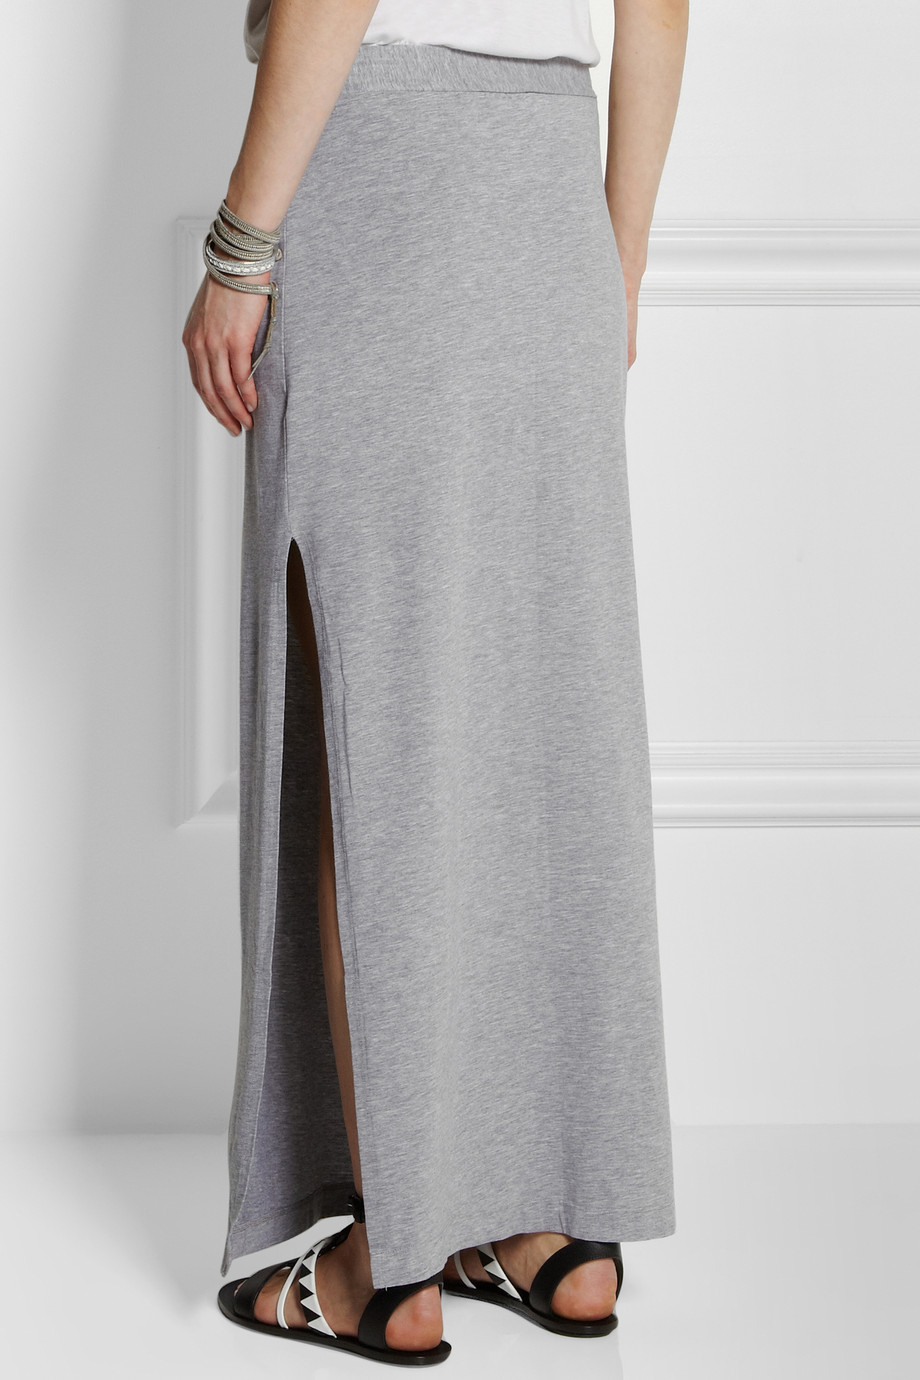 Lyst - Splendid Always Stretch-Jersey Maxi Skirt in Gray